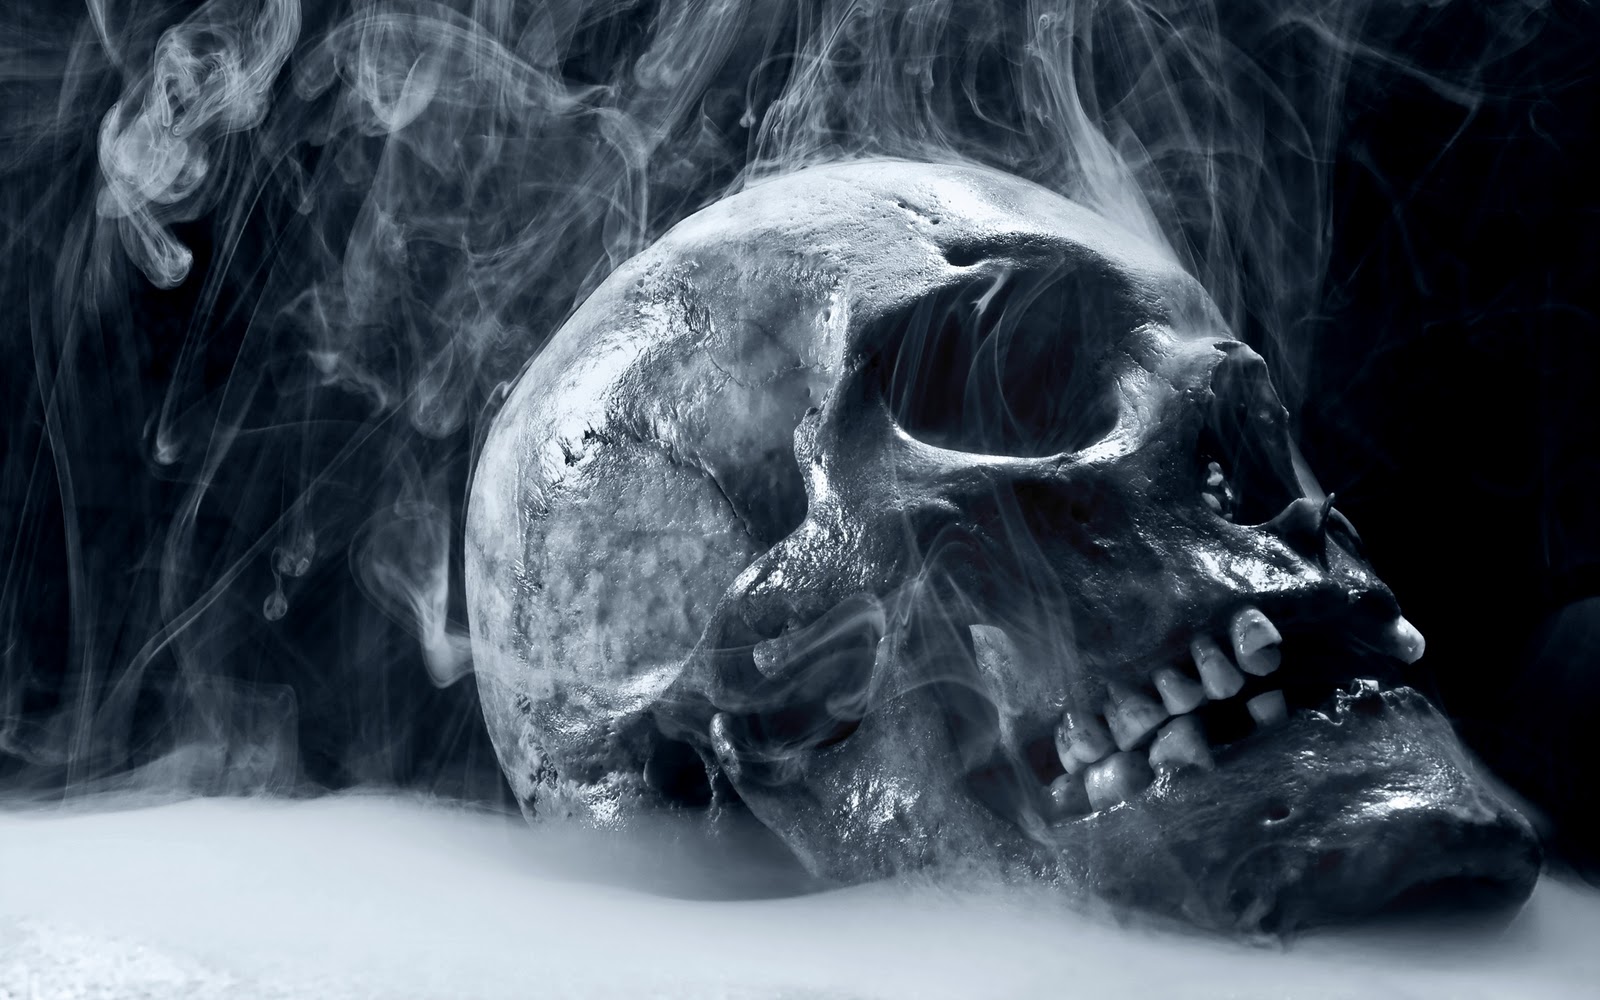 http://1.bp.blogspot.com/-n9CJv4uk0hA/TdjpHwhQC8I/AAAAAAAAAPI/ZSHk4dP3RL0/s1600/Archive_Miscellaneous_Skull_smoking-skull-horror-hd-wallpaper.jpg